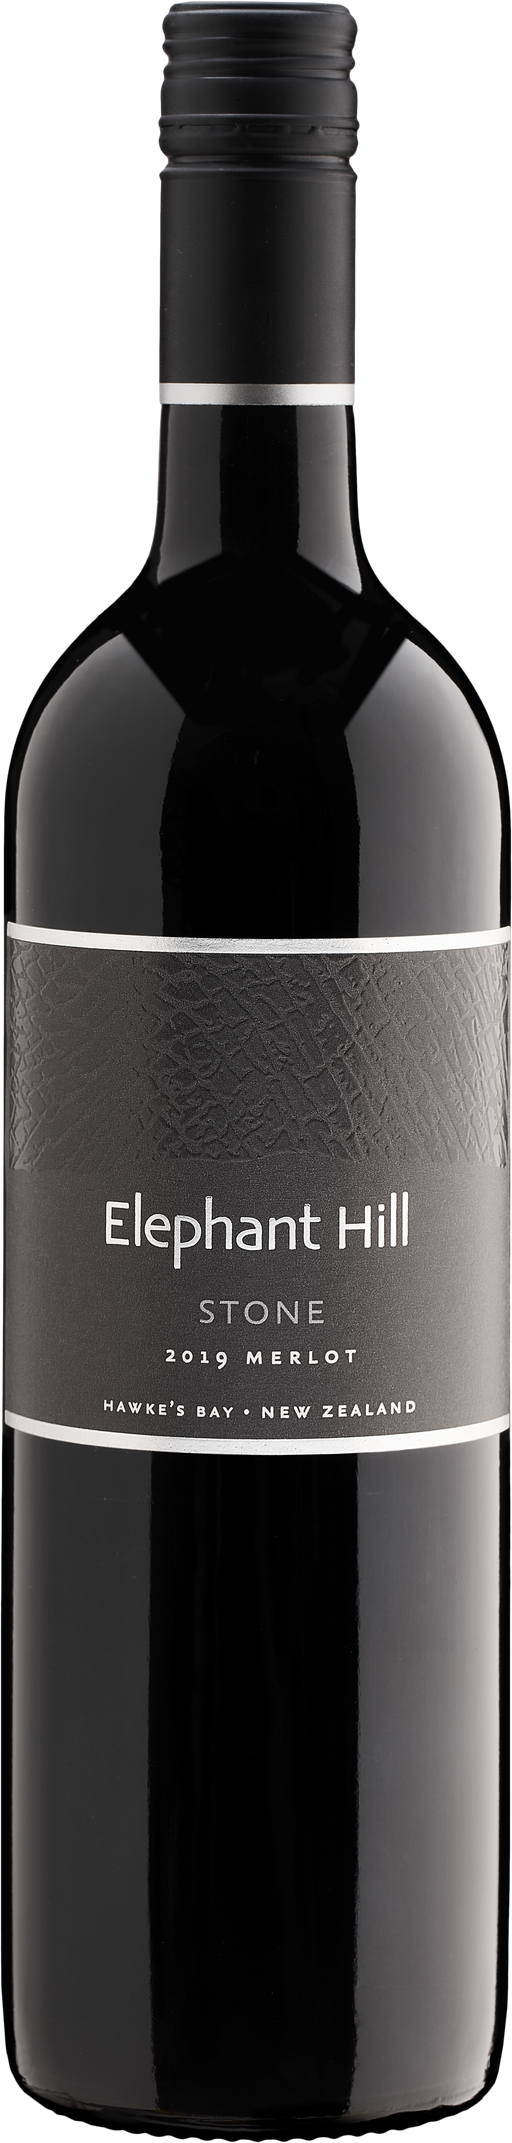 2019 Elephant Hill Stone Merlot